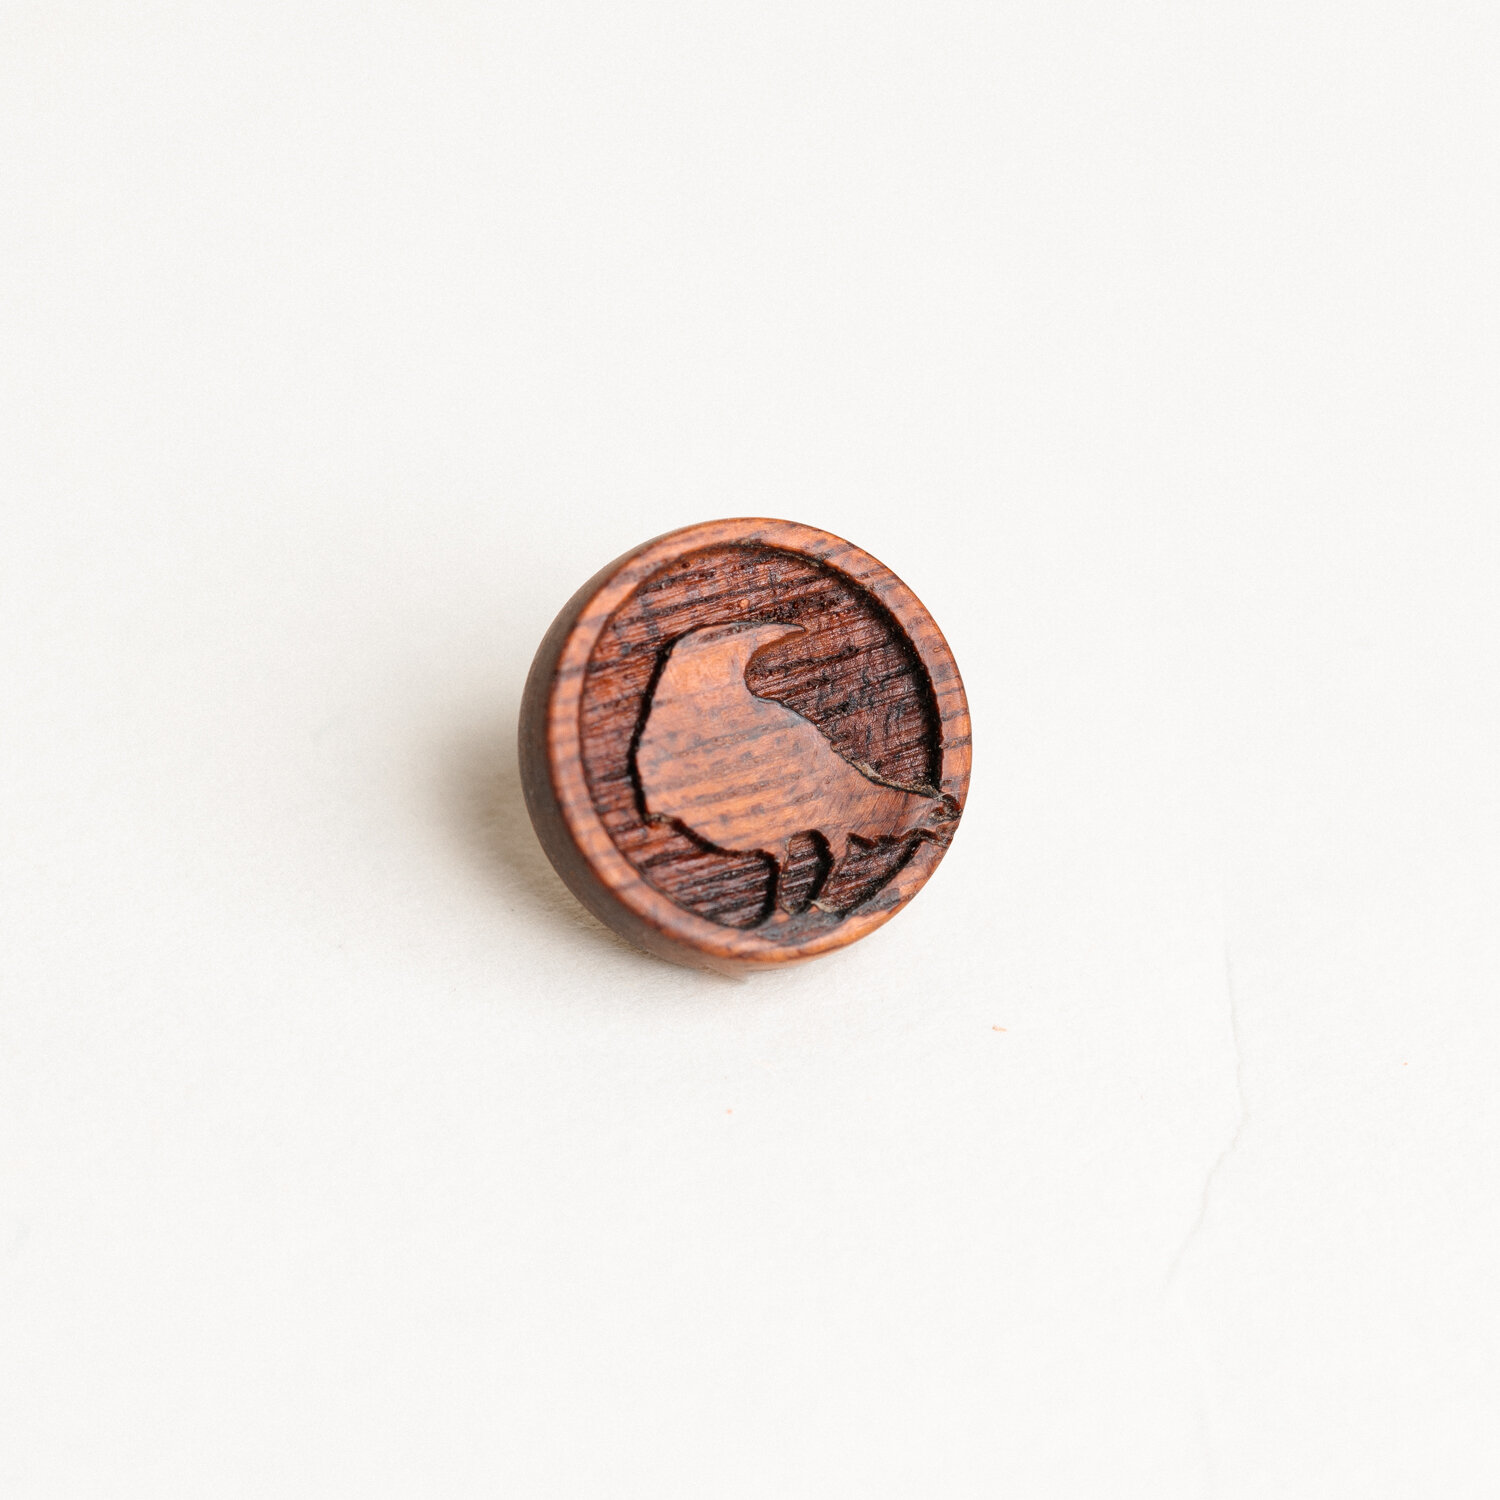 Wooden Bloodwood Raven Laser Engraved Soft Release Button for Cameras, Threaded REG